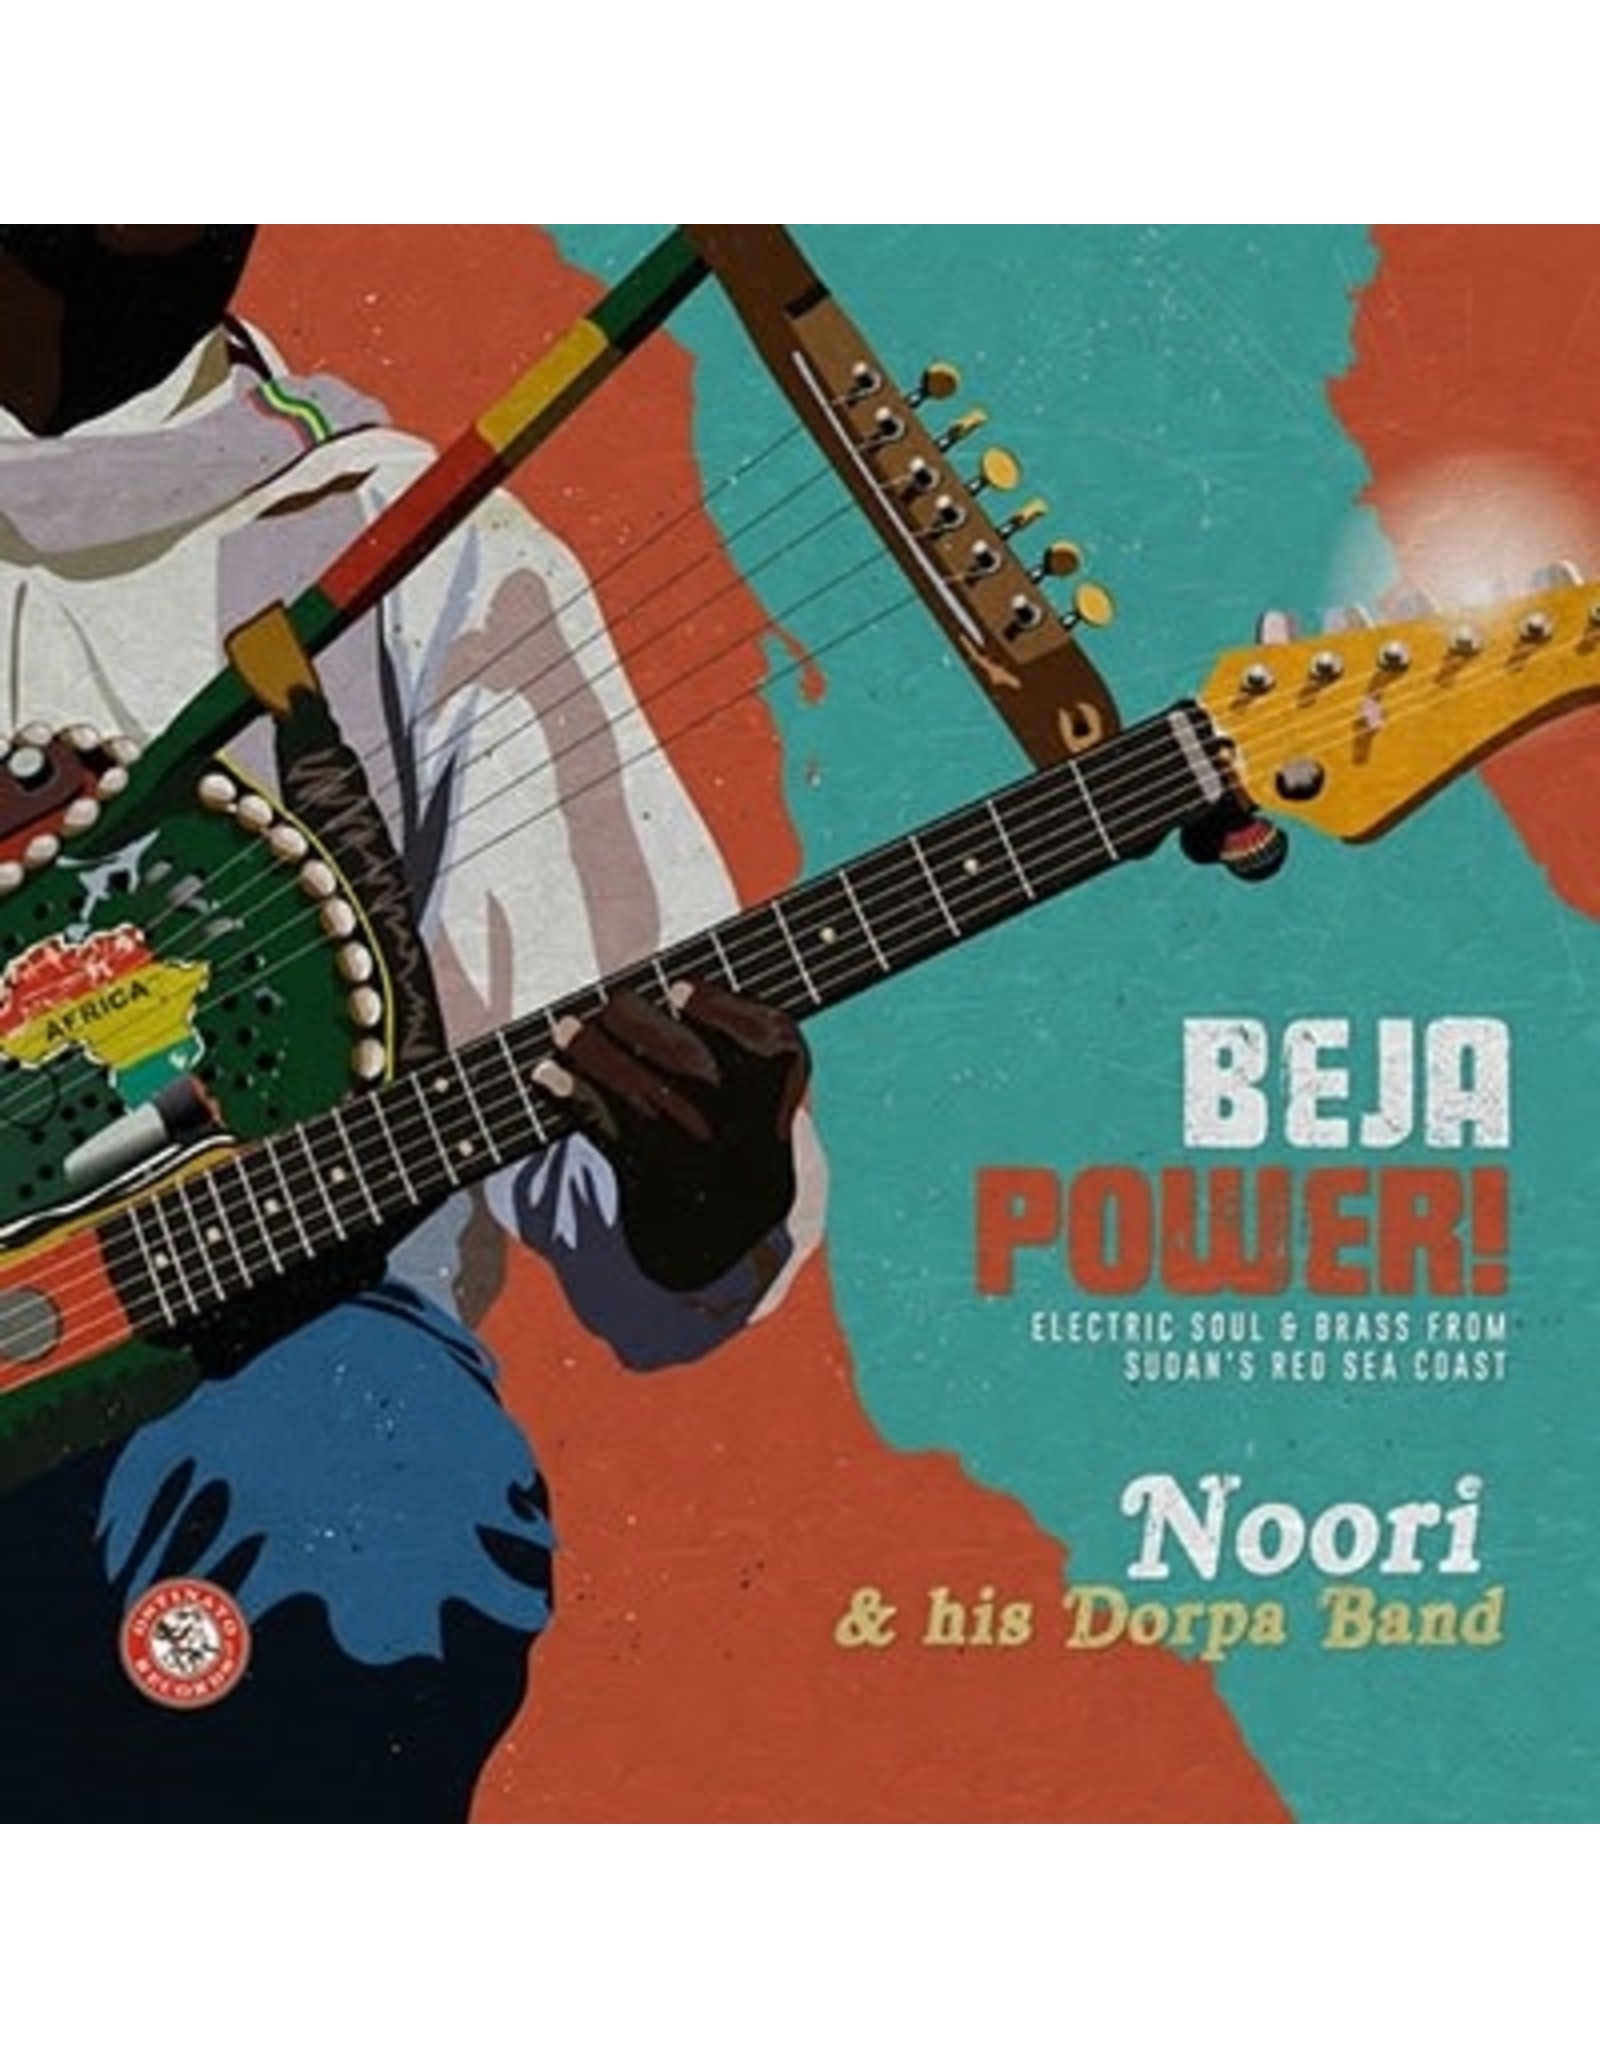 New Vinyl Noori & His Dorpa Band - Beja Power! Electric Soul & Brass from Sudan's Red Sea Coast LP